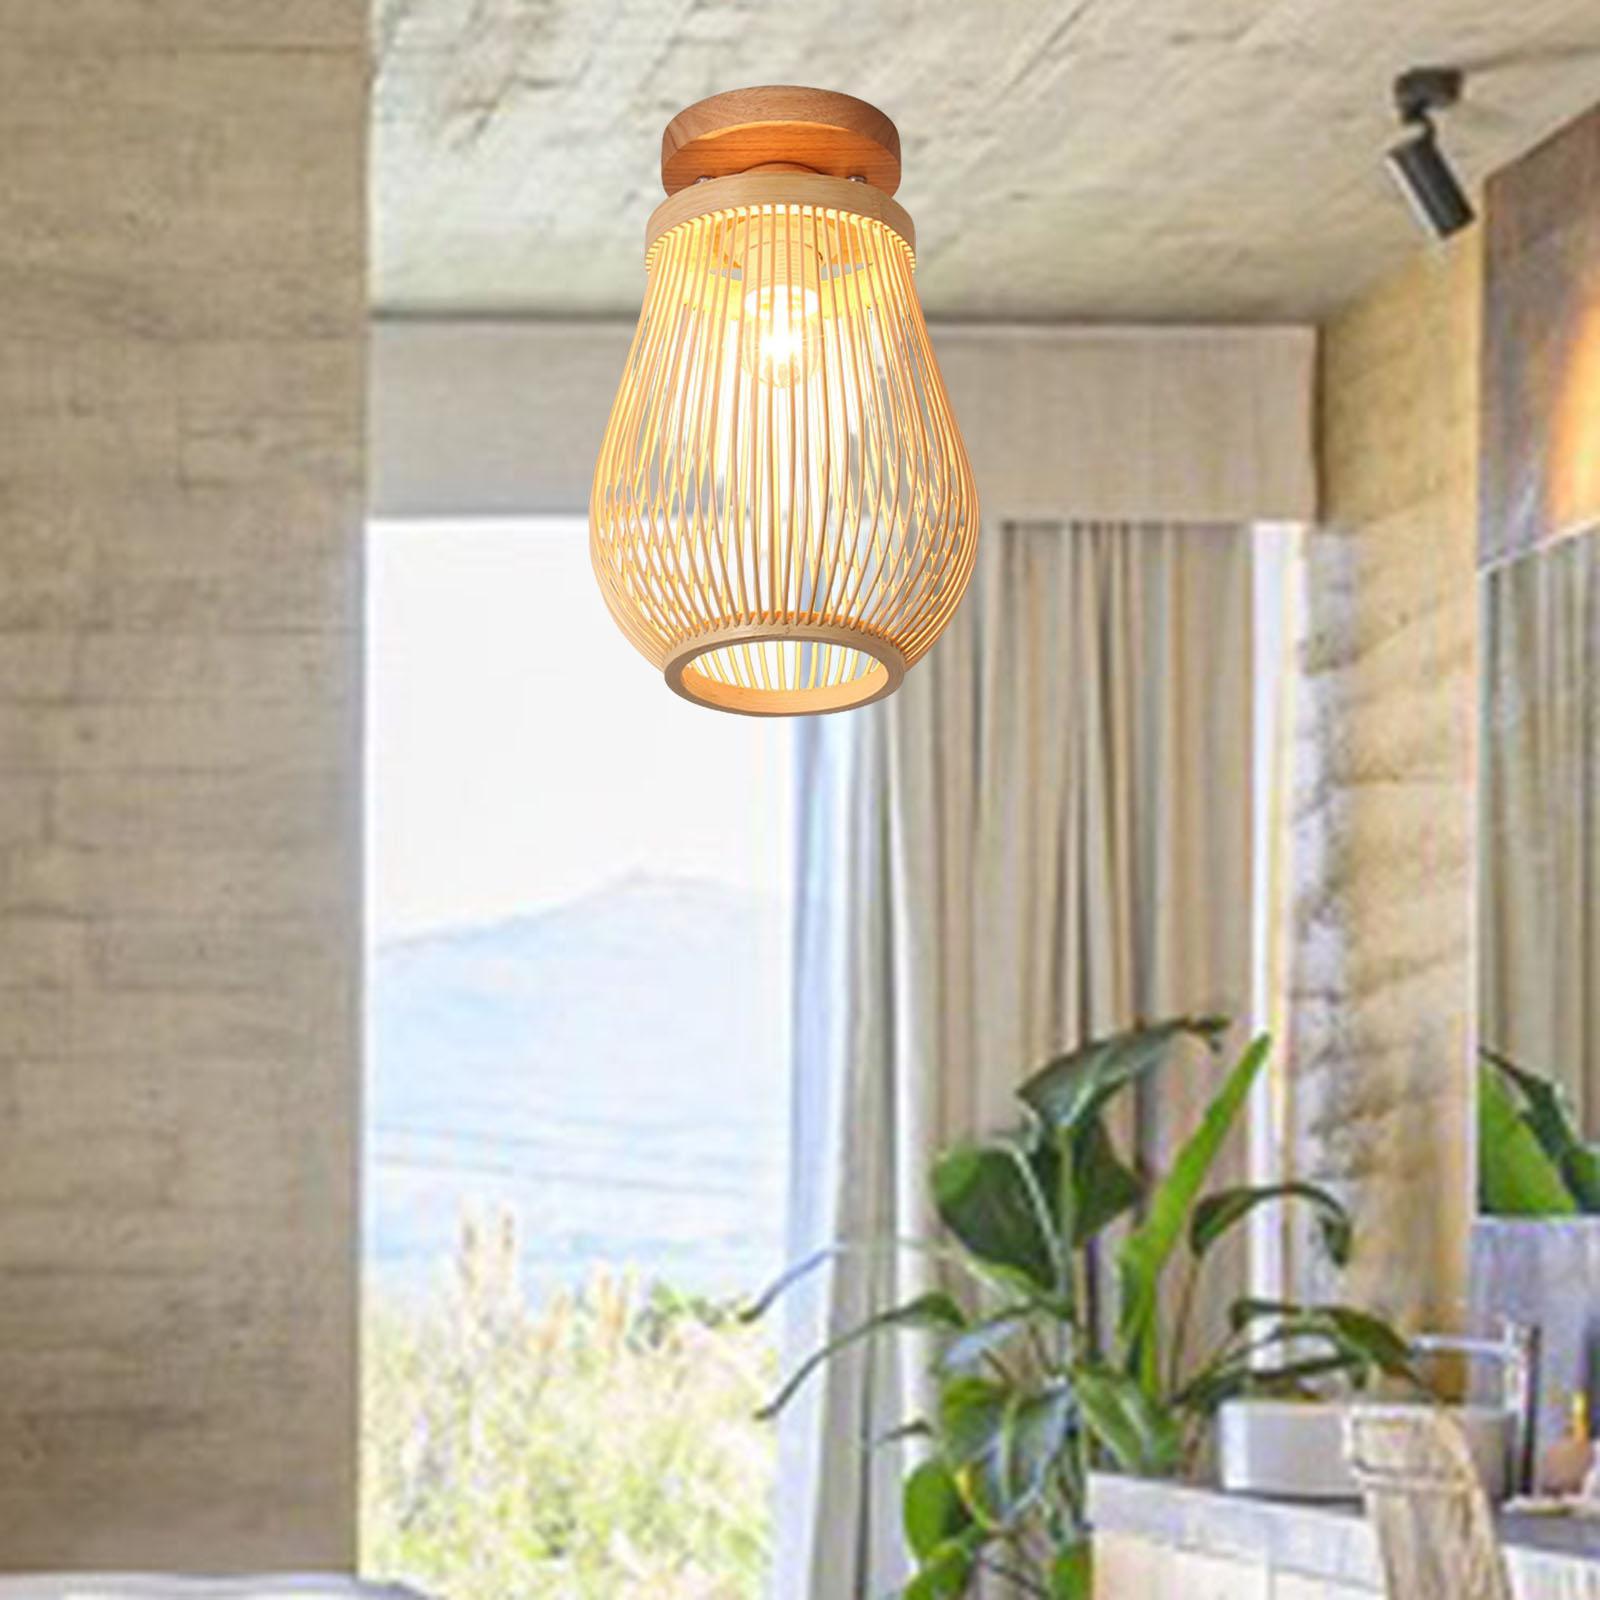 Bamboo Wicker Lantern Lampshade Ceiling Light Fixture Fixture Kitchen